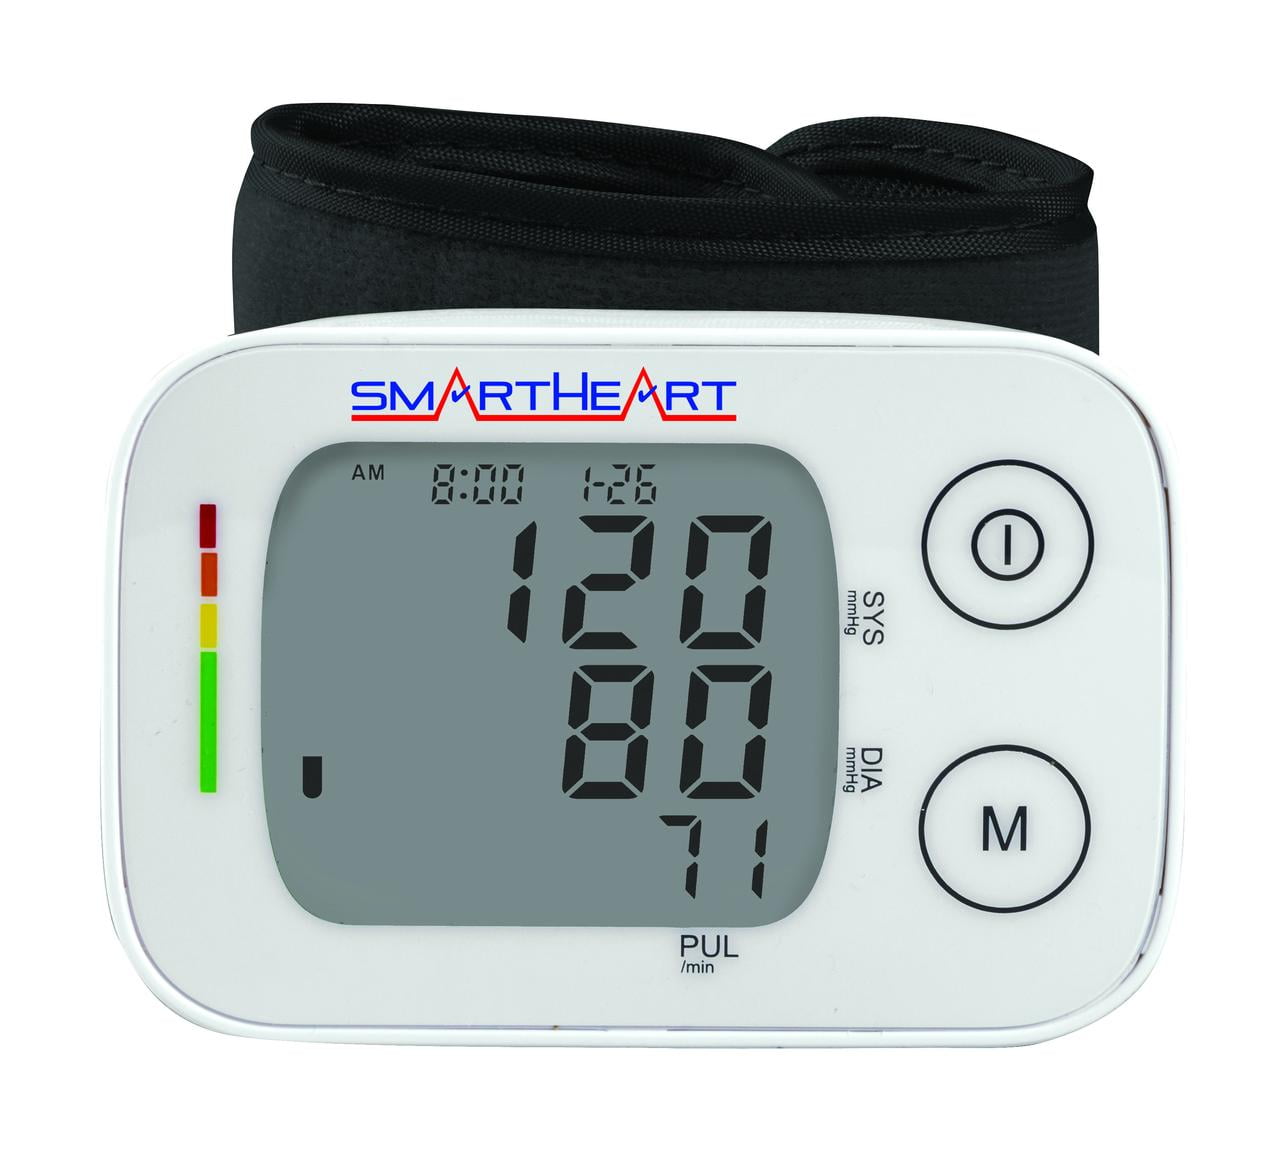 Premium Wrist Blood Pressure Monitor with Attached Wrist Cuff